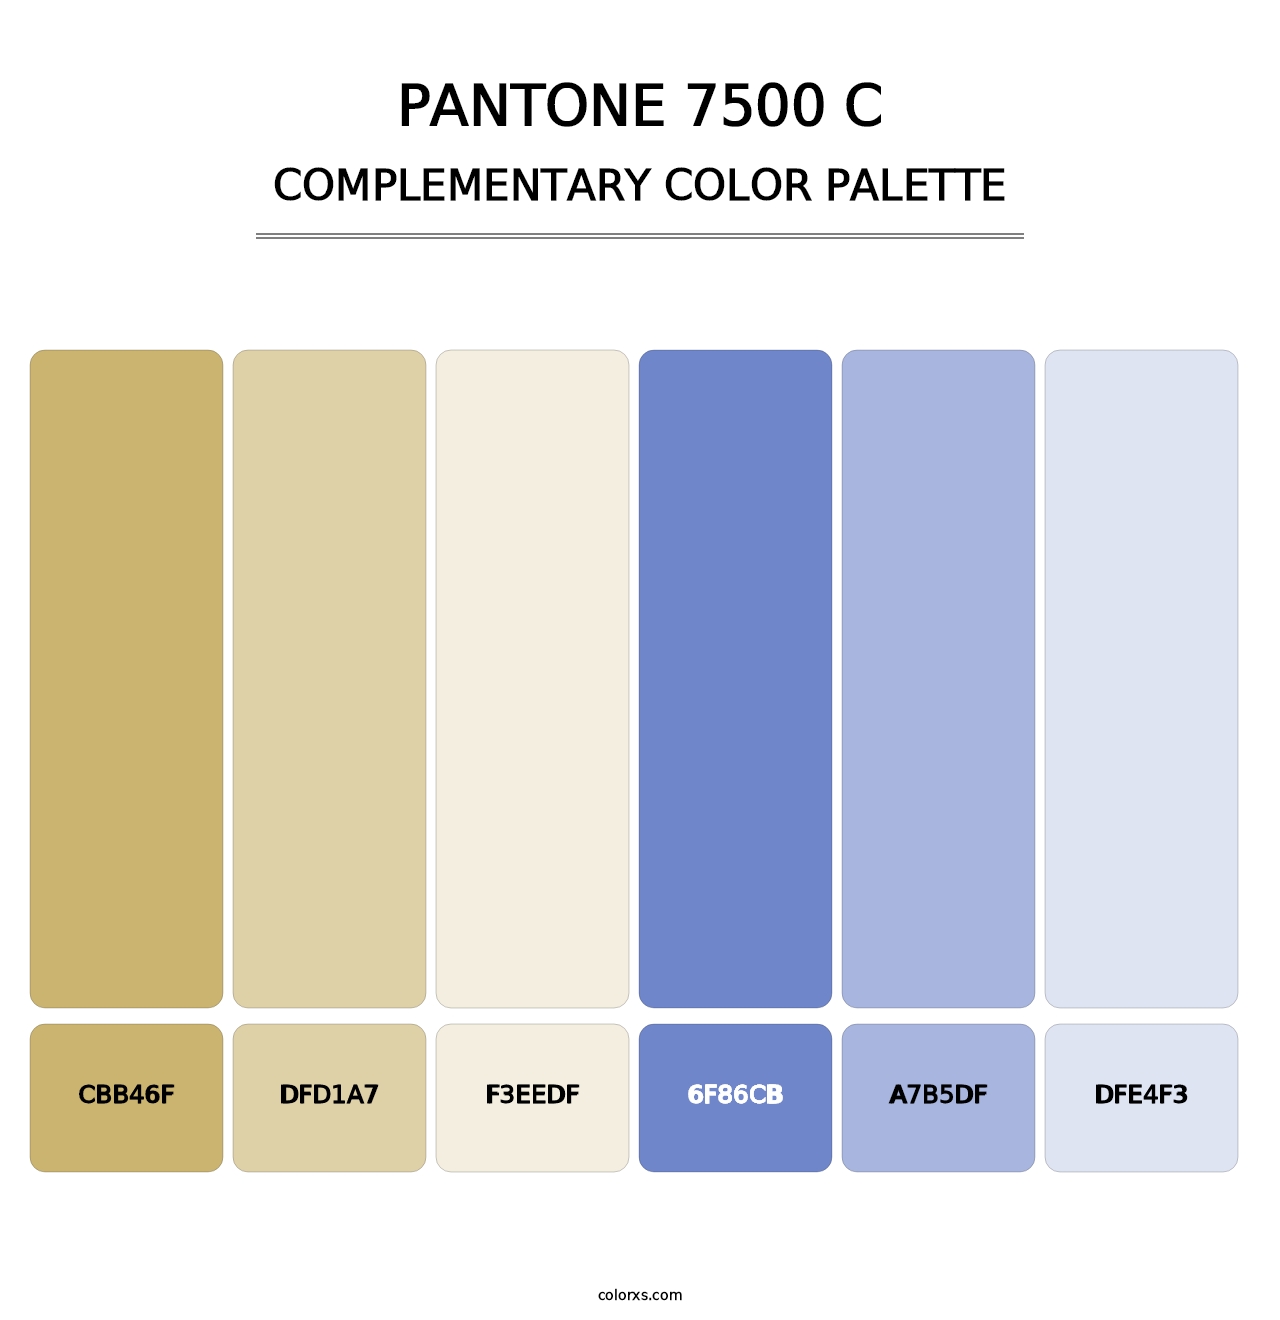 PANTONE 7500 C - Complementary Color Palette